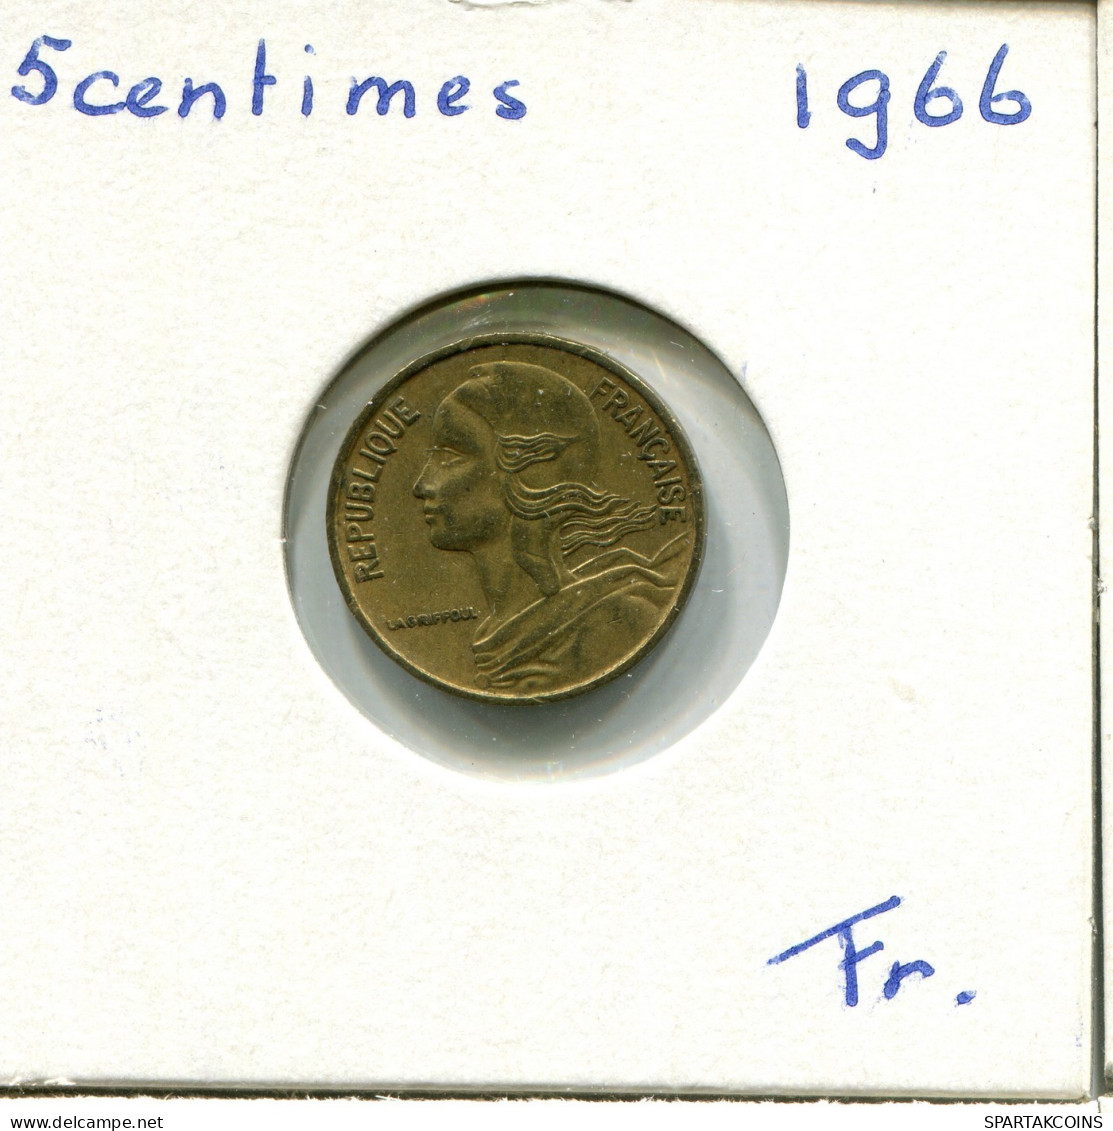 5 CENTIMES 1966 FRANCE Pièce #AX055.F.A - 5 Centimes